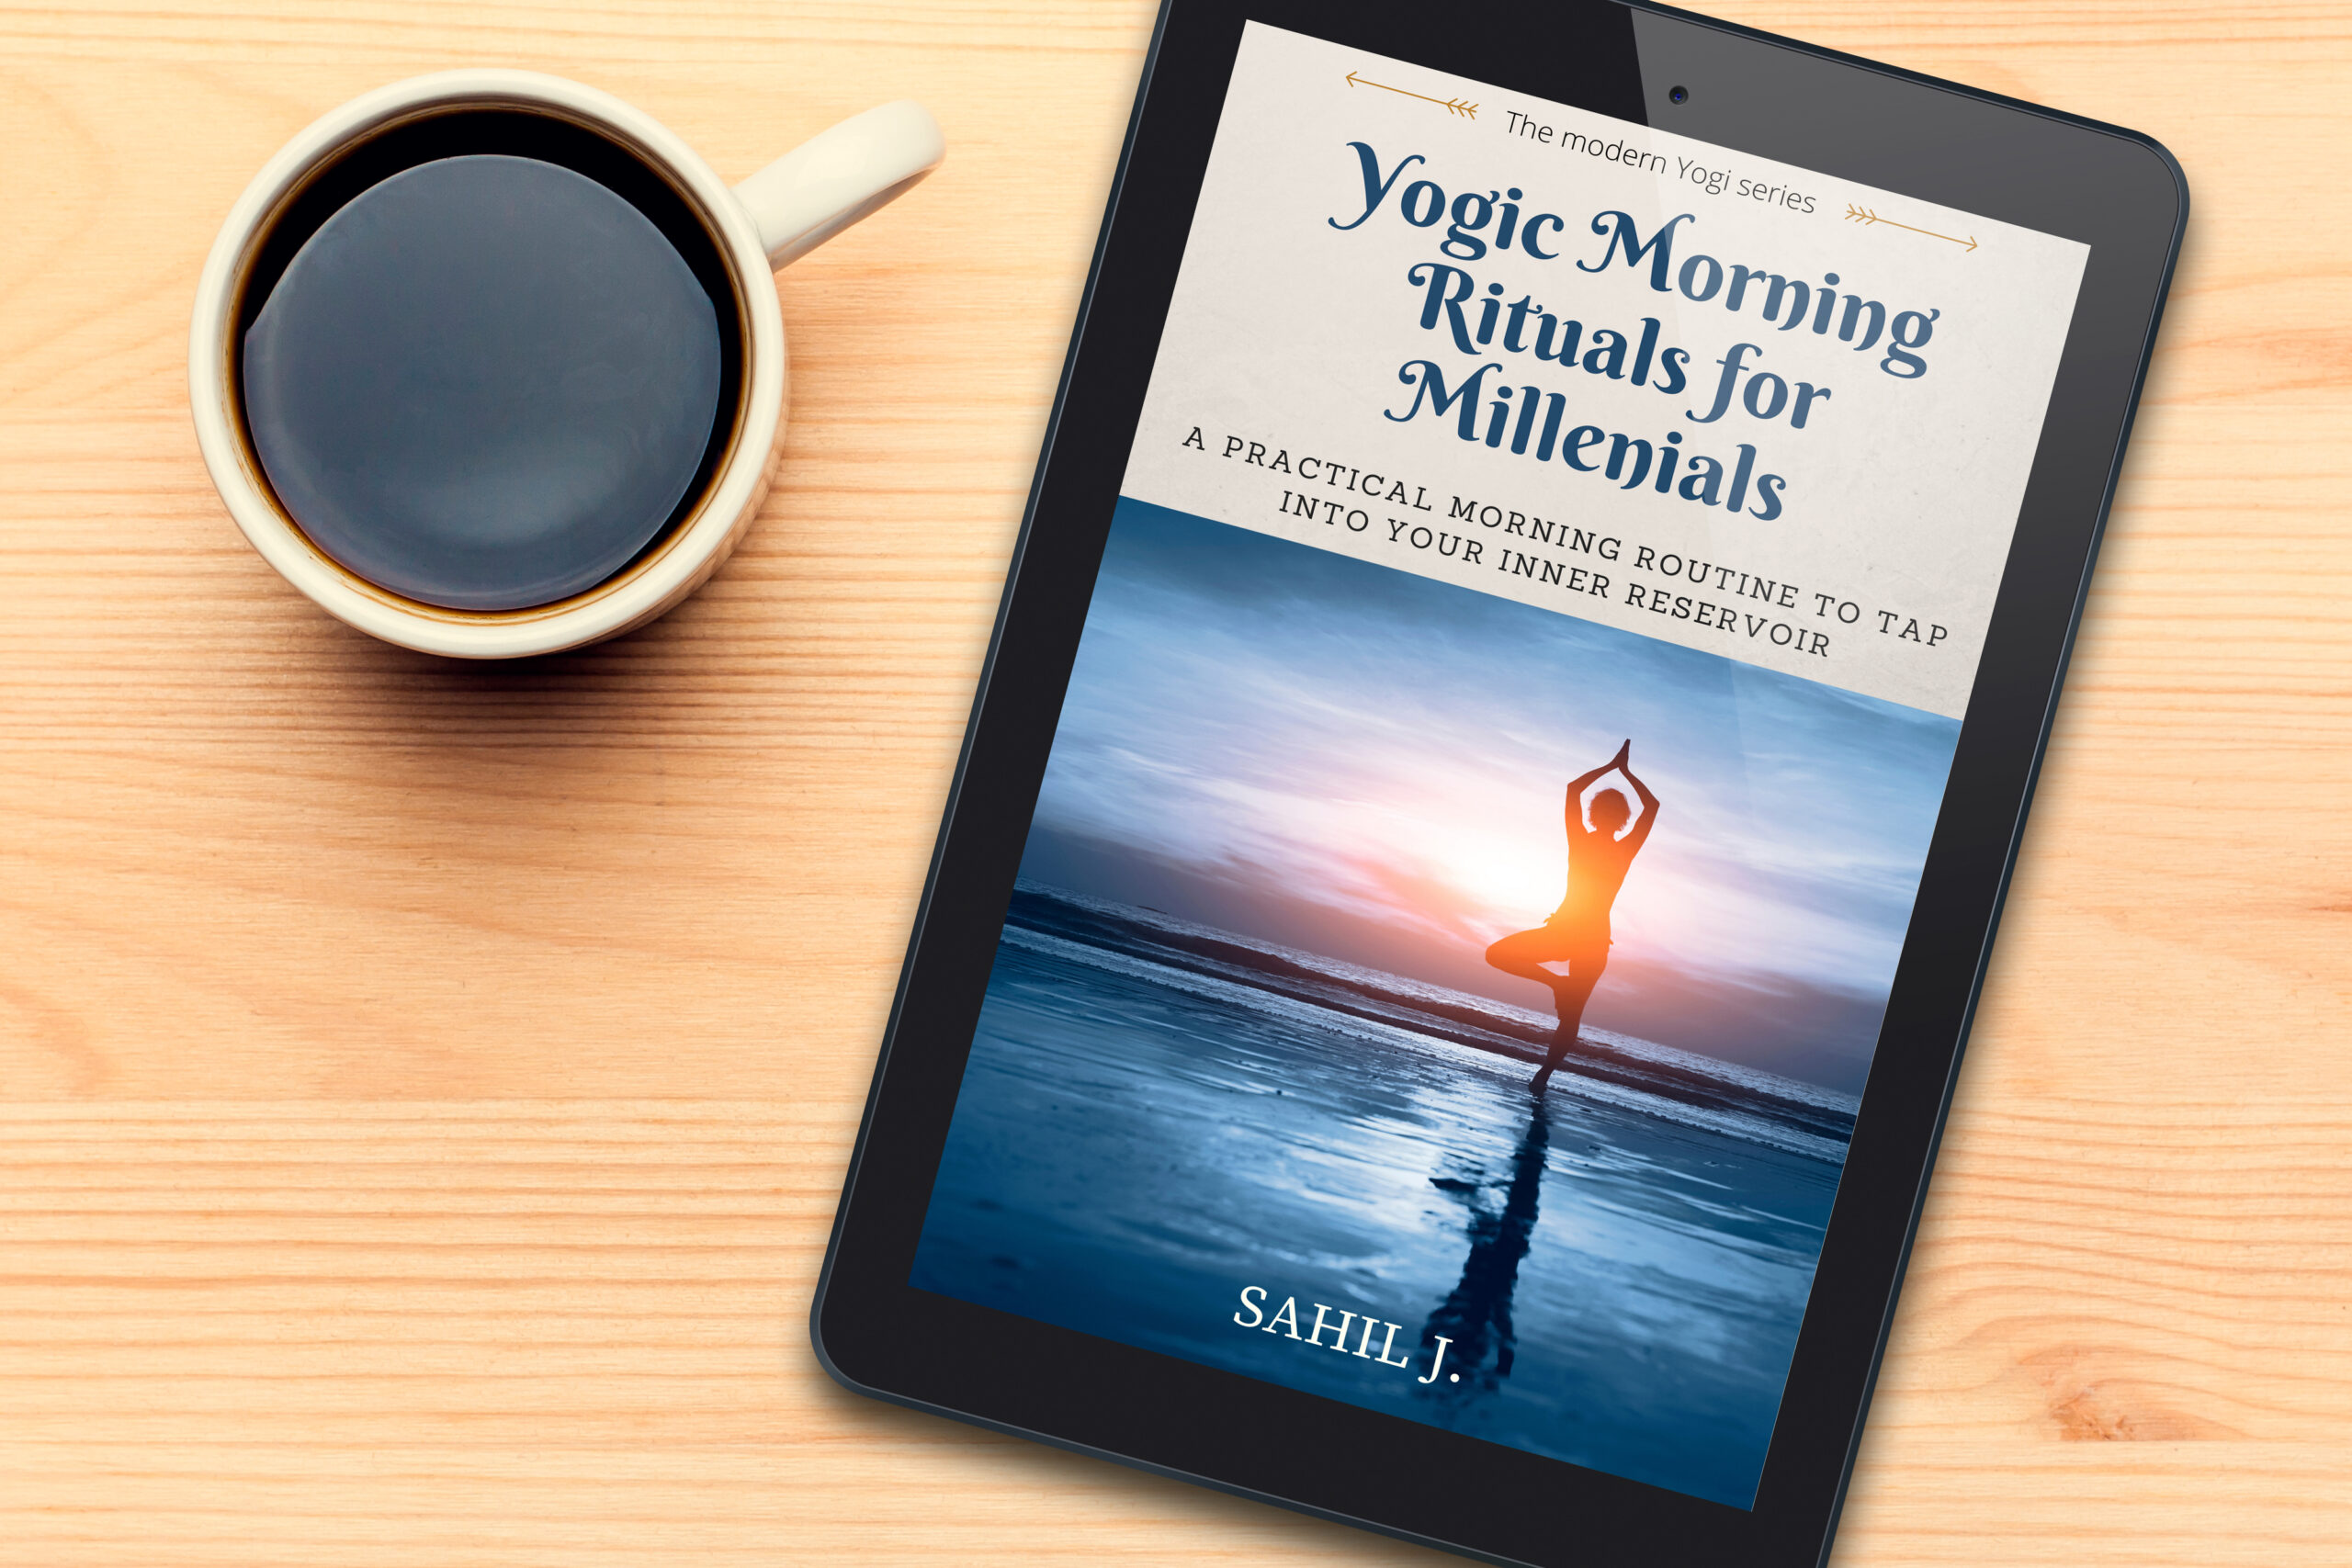 FREE: Yogic Morning Rituals for Millennials by Sahil Jaggi